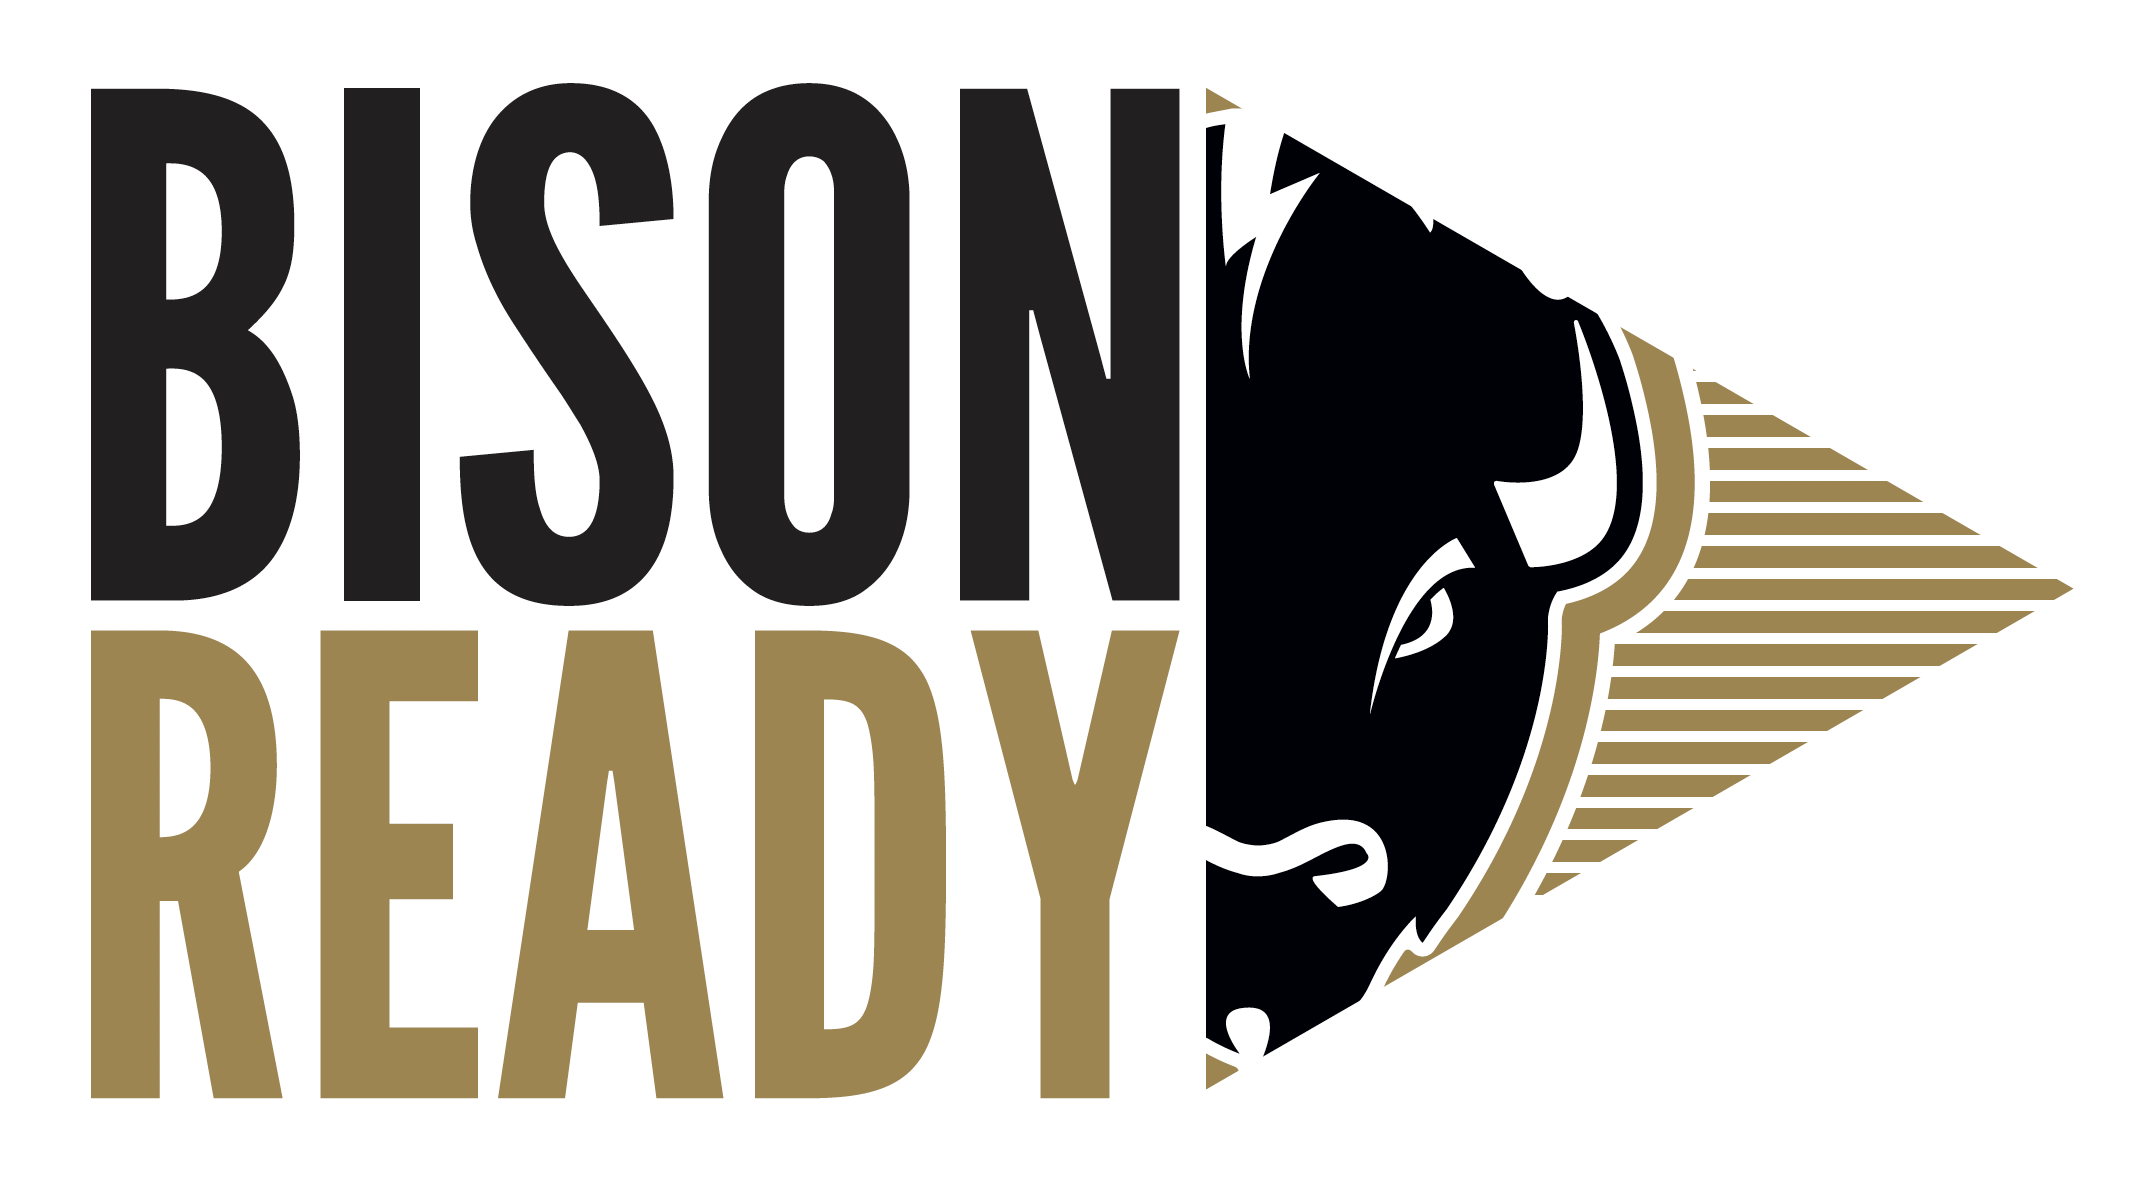 Bison Ready logo